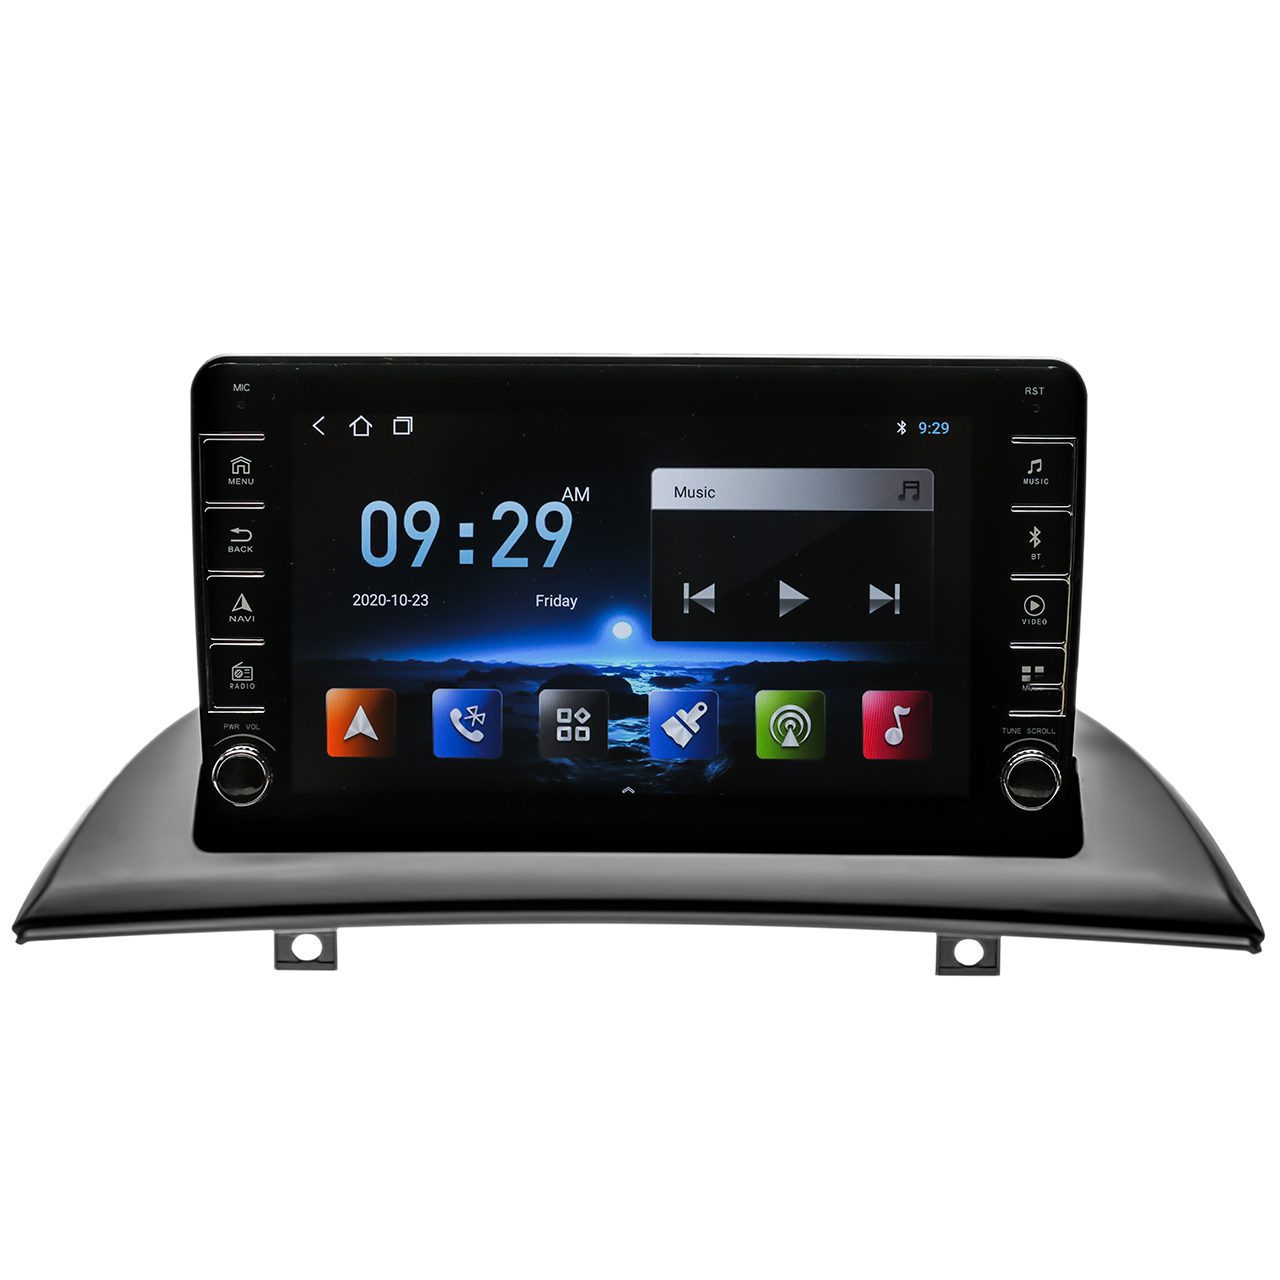 Navigatie AUTONAV Android GPS Dedicata BMW X3 E83, Model PRO Memorie 32GB Stocare, 2GB DDR3 RAM, Butoane Laterale Si Regulator Volum, Display 8